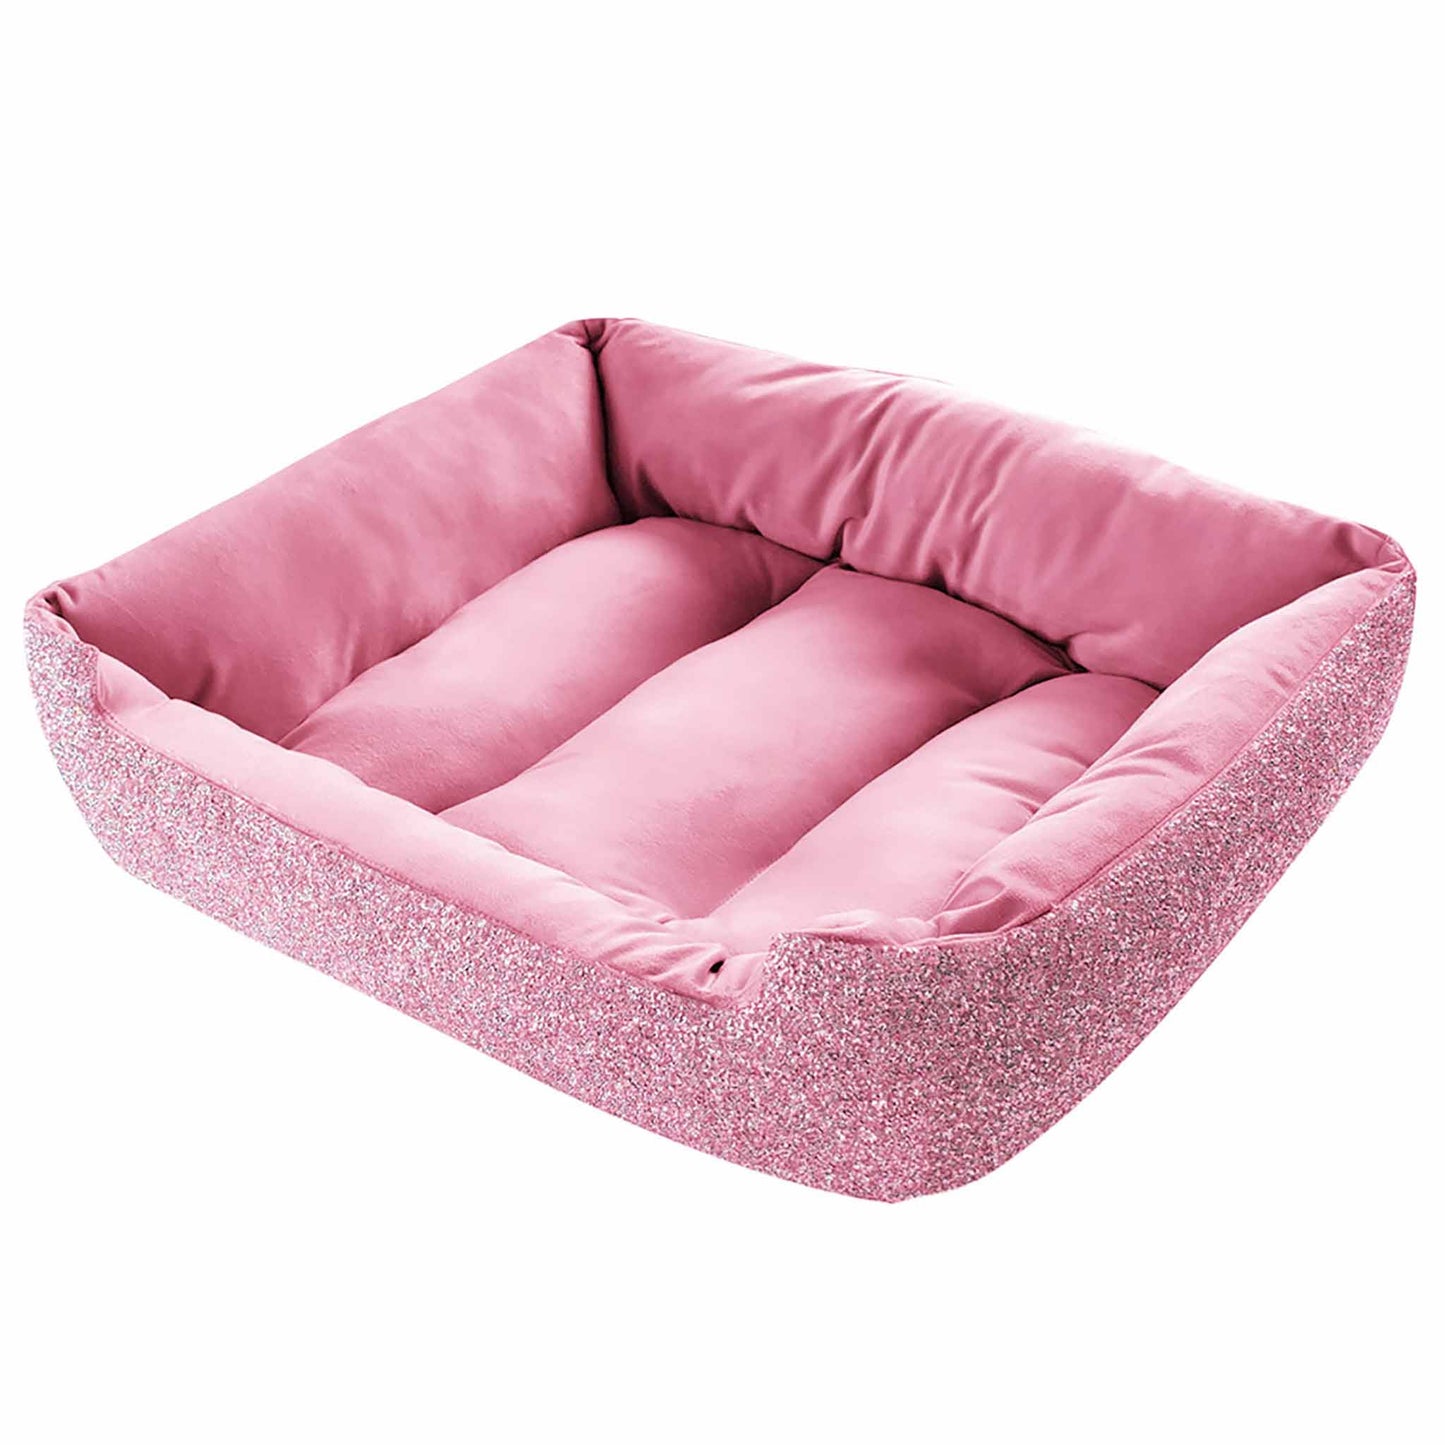 Rhinestone Dog Bed: Small / Pink